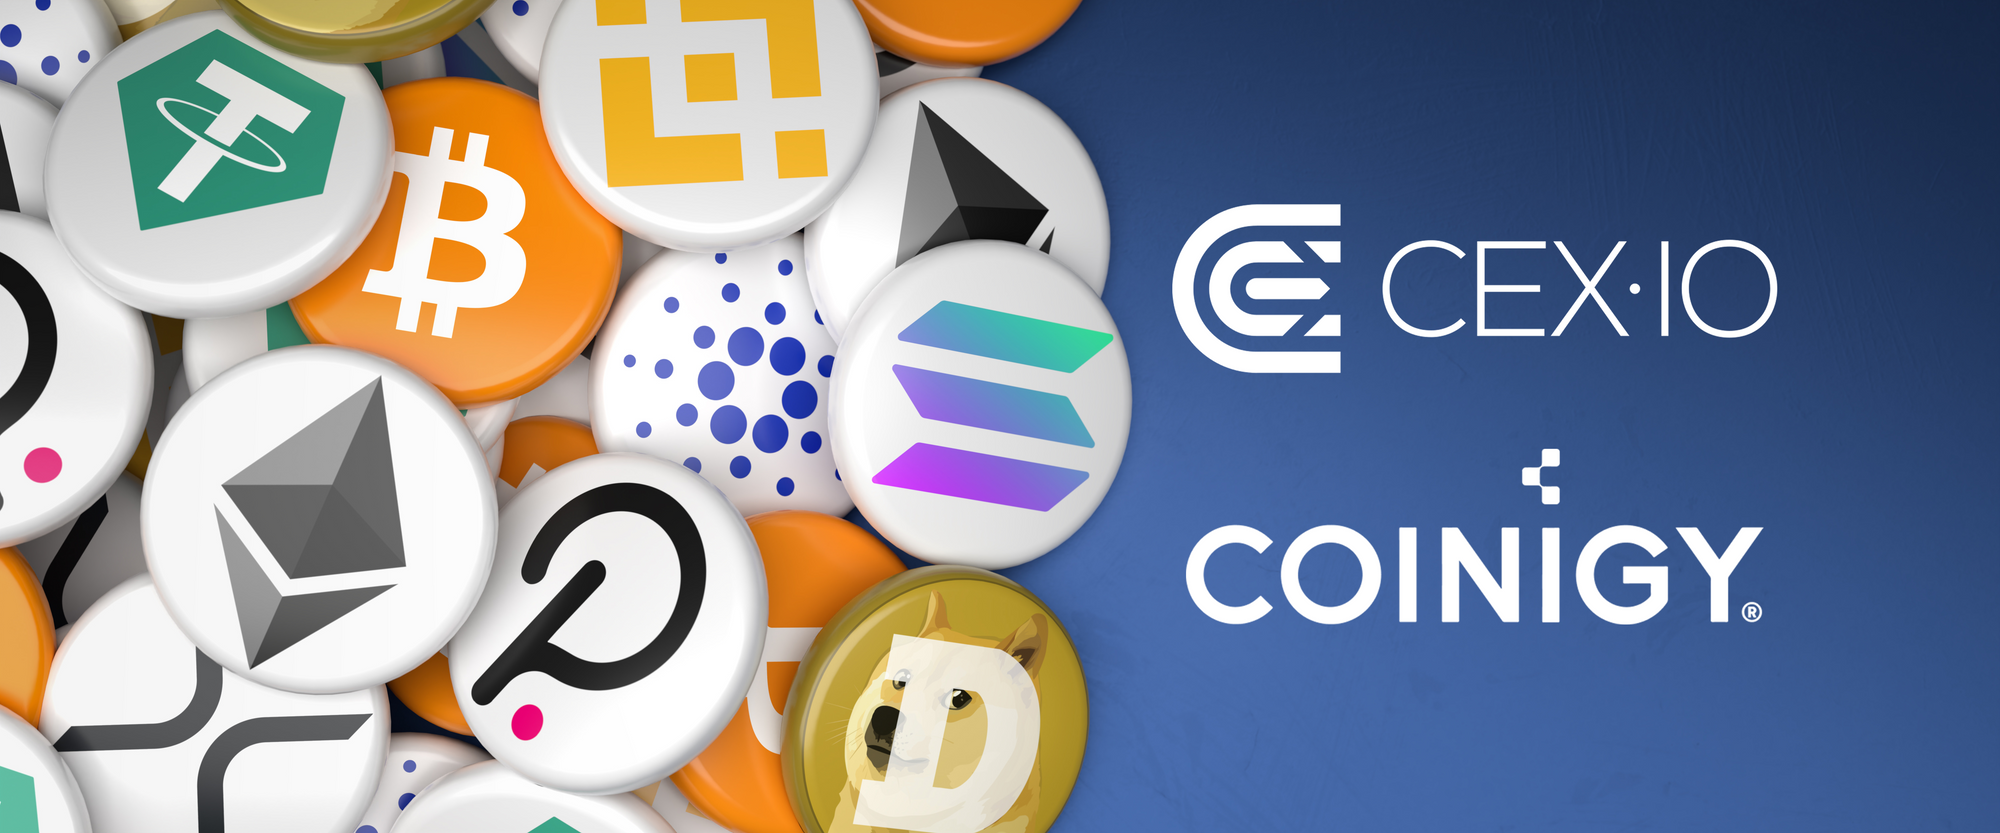 Coinigy Partnership & CEX.IO API Update